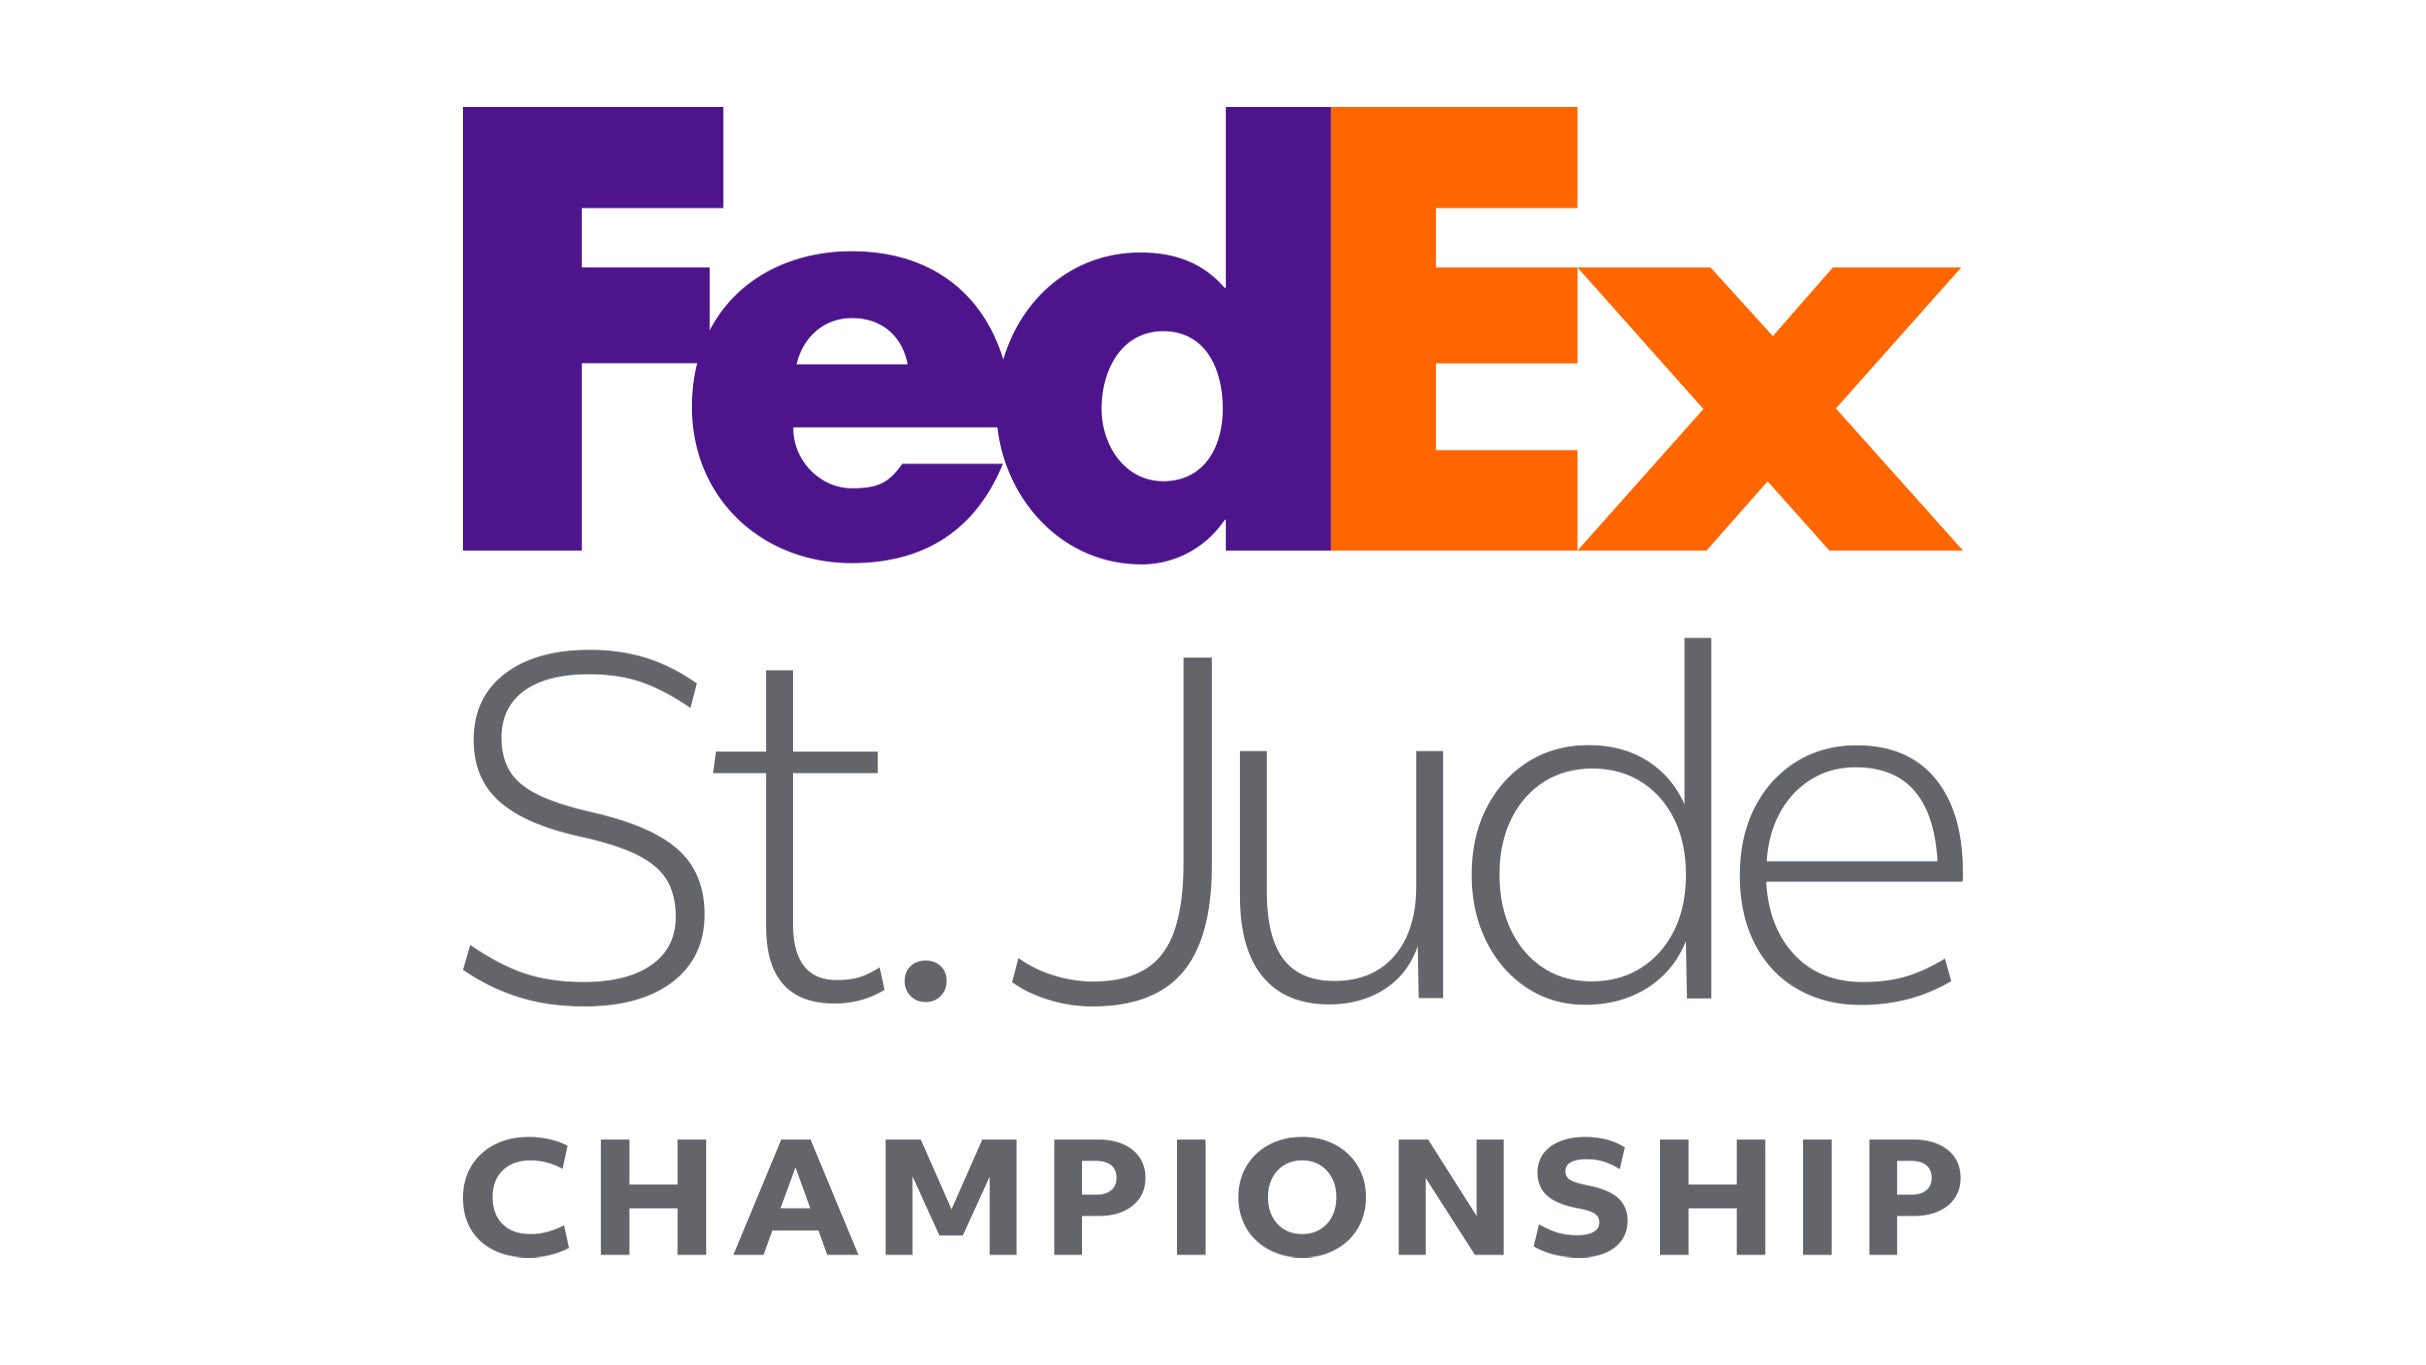 Fedex St. Jude Championship - Thursday at TPC Southwind